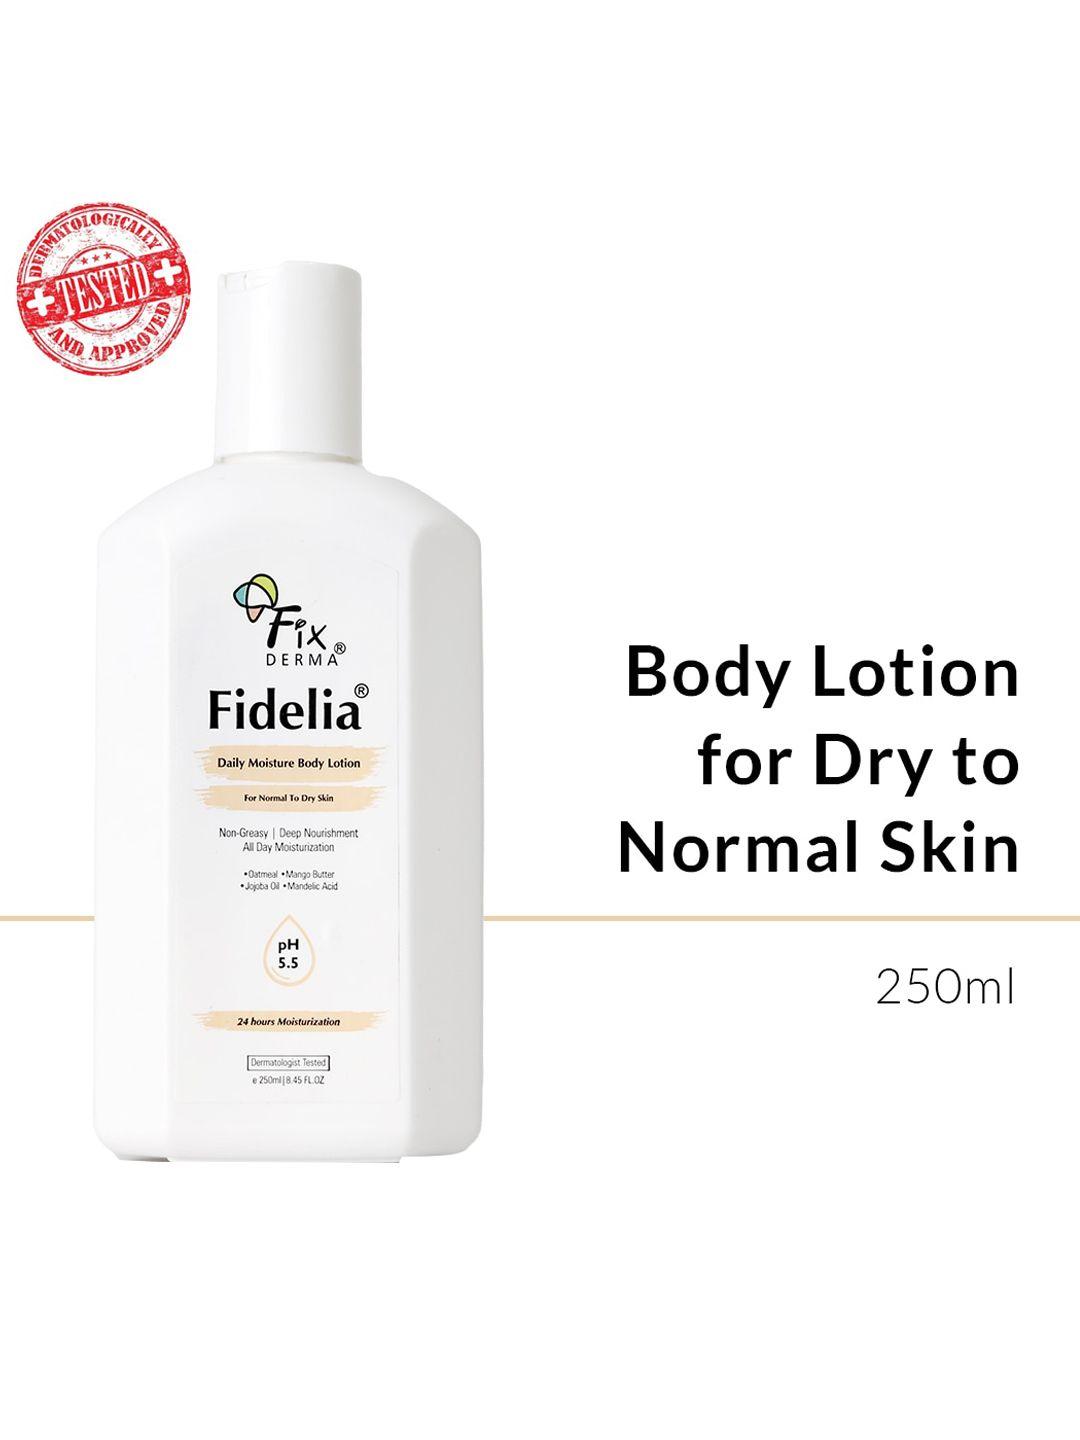 fixderma fidelia daily moisture body lotion with jojoba oil & oatmeal - 250ml